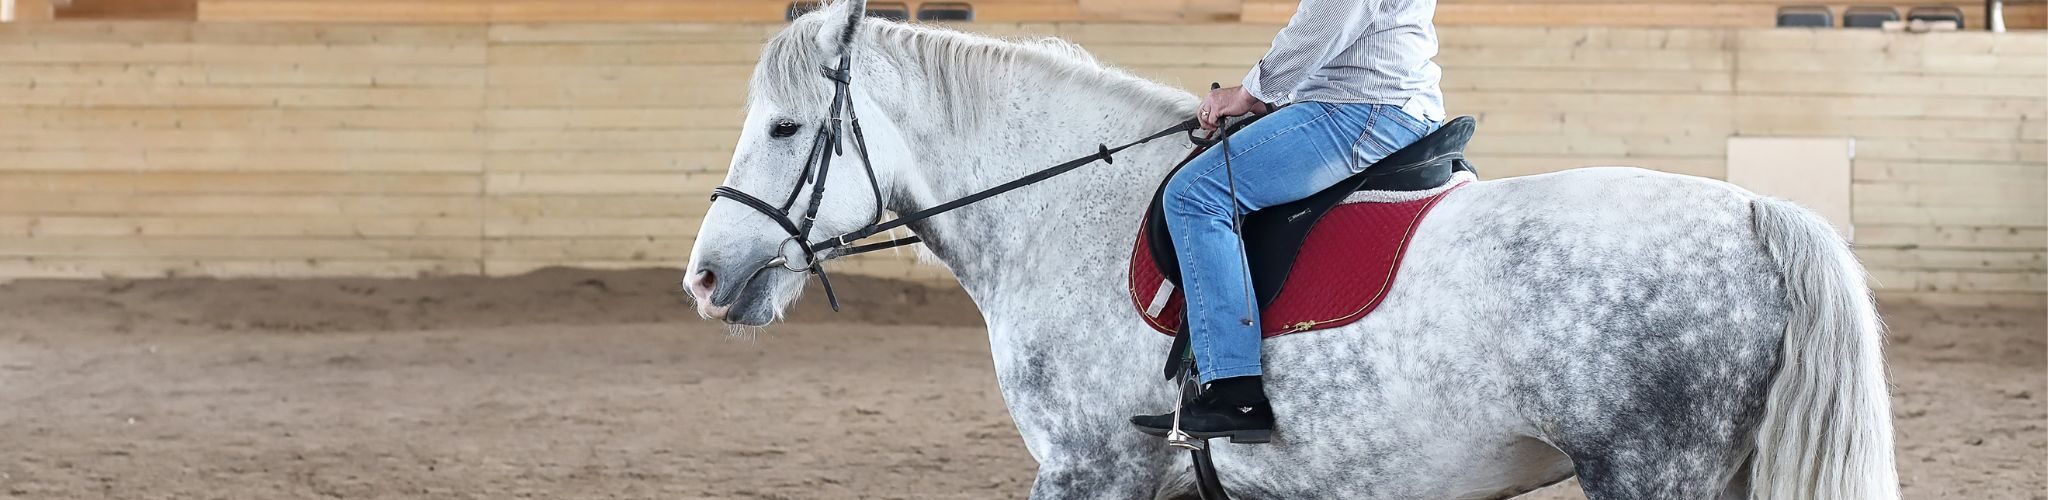 beginner riding dapple gray horse